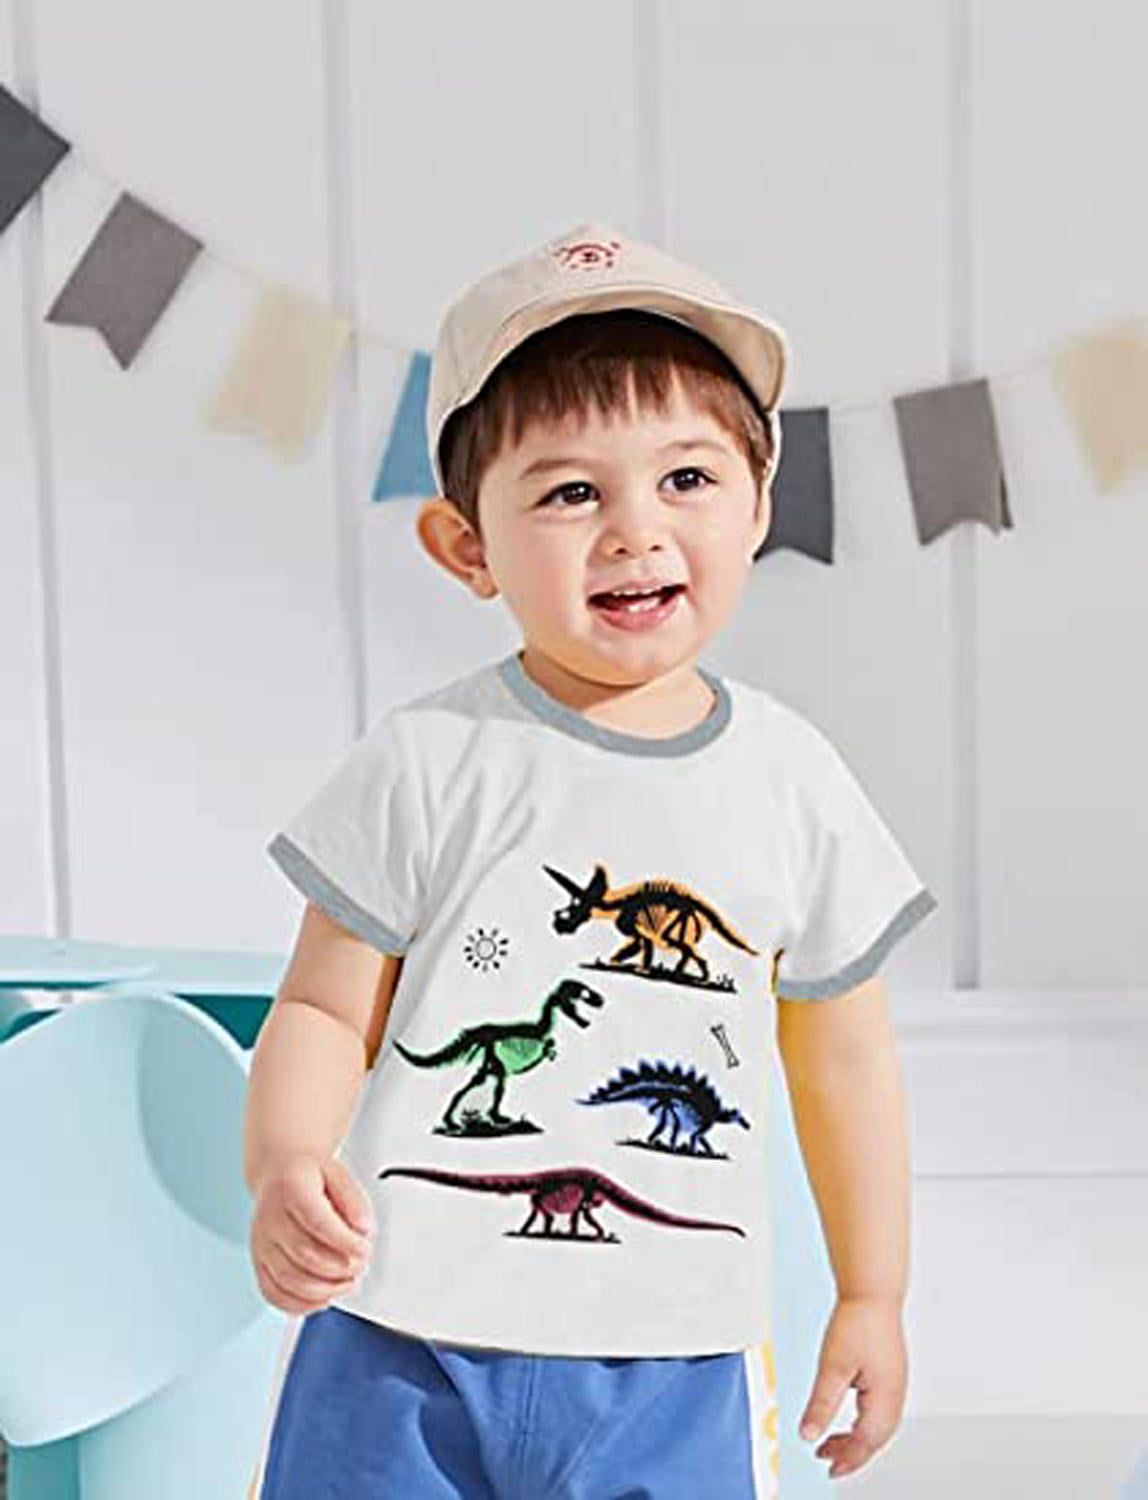 Cm-Kid Boys T Shirts Dinosaur 2-Pack Kids Summer Short Sleeve Tops 6T